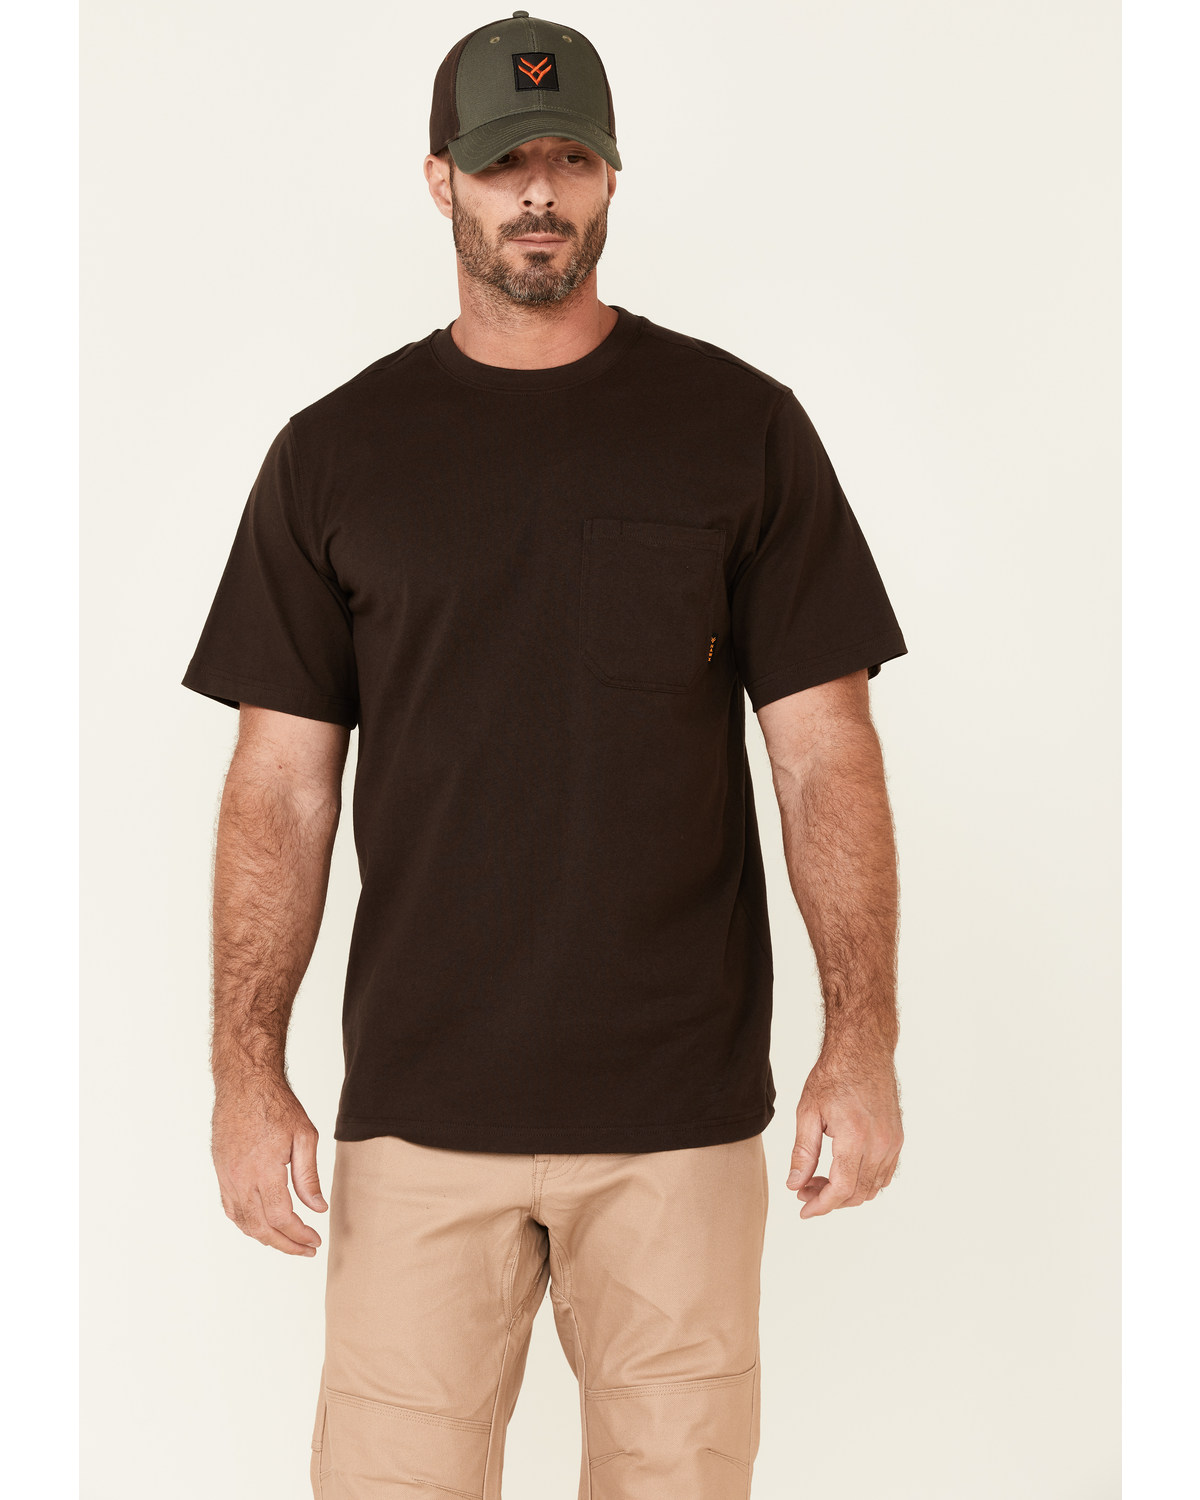 Hawx Men's Solid Dark Brown Forge Short Sleeve Work Pocket T-Shirt